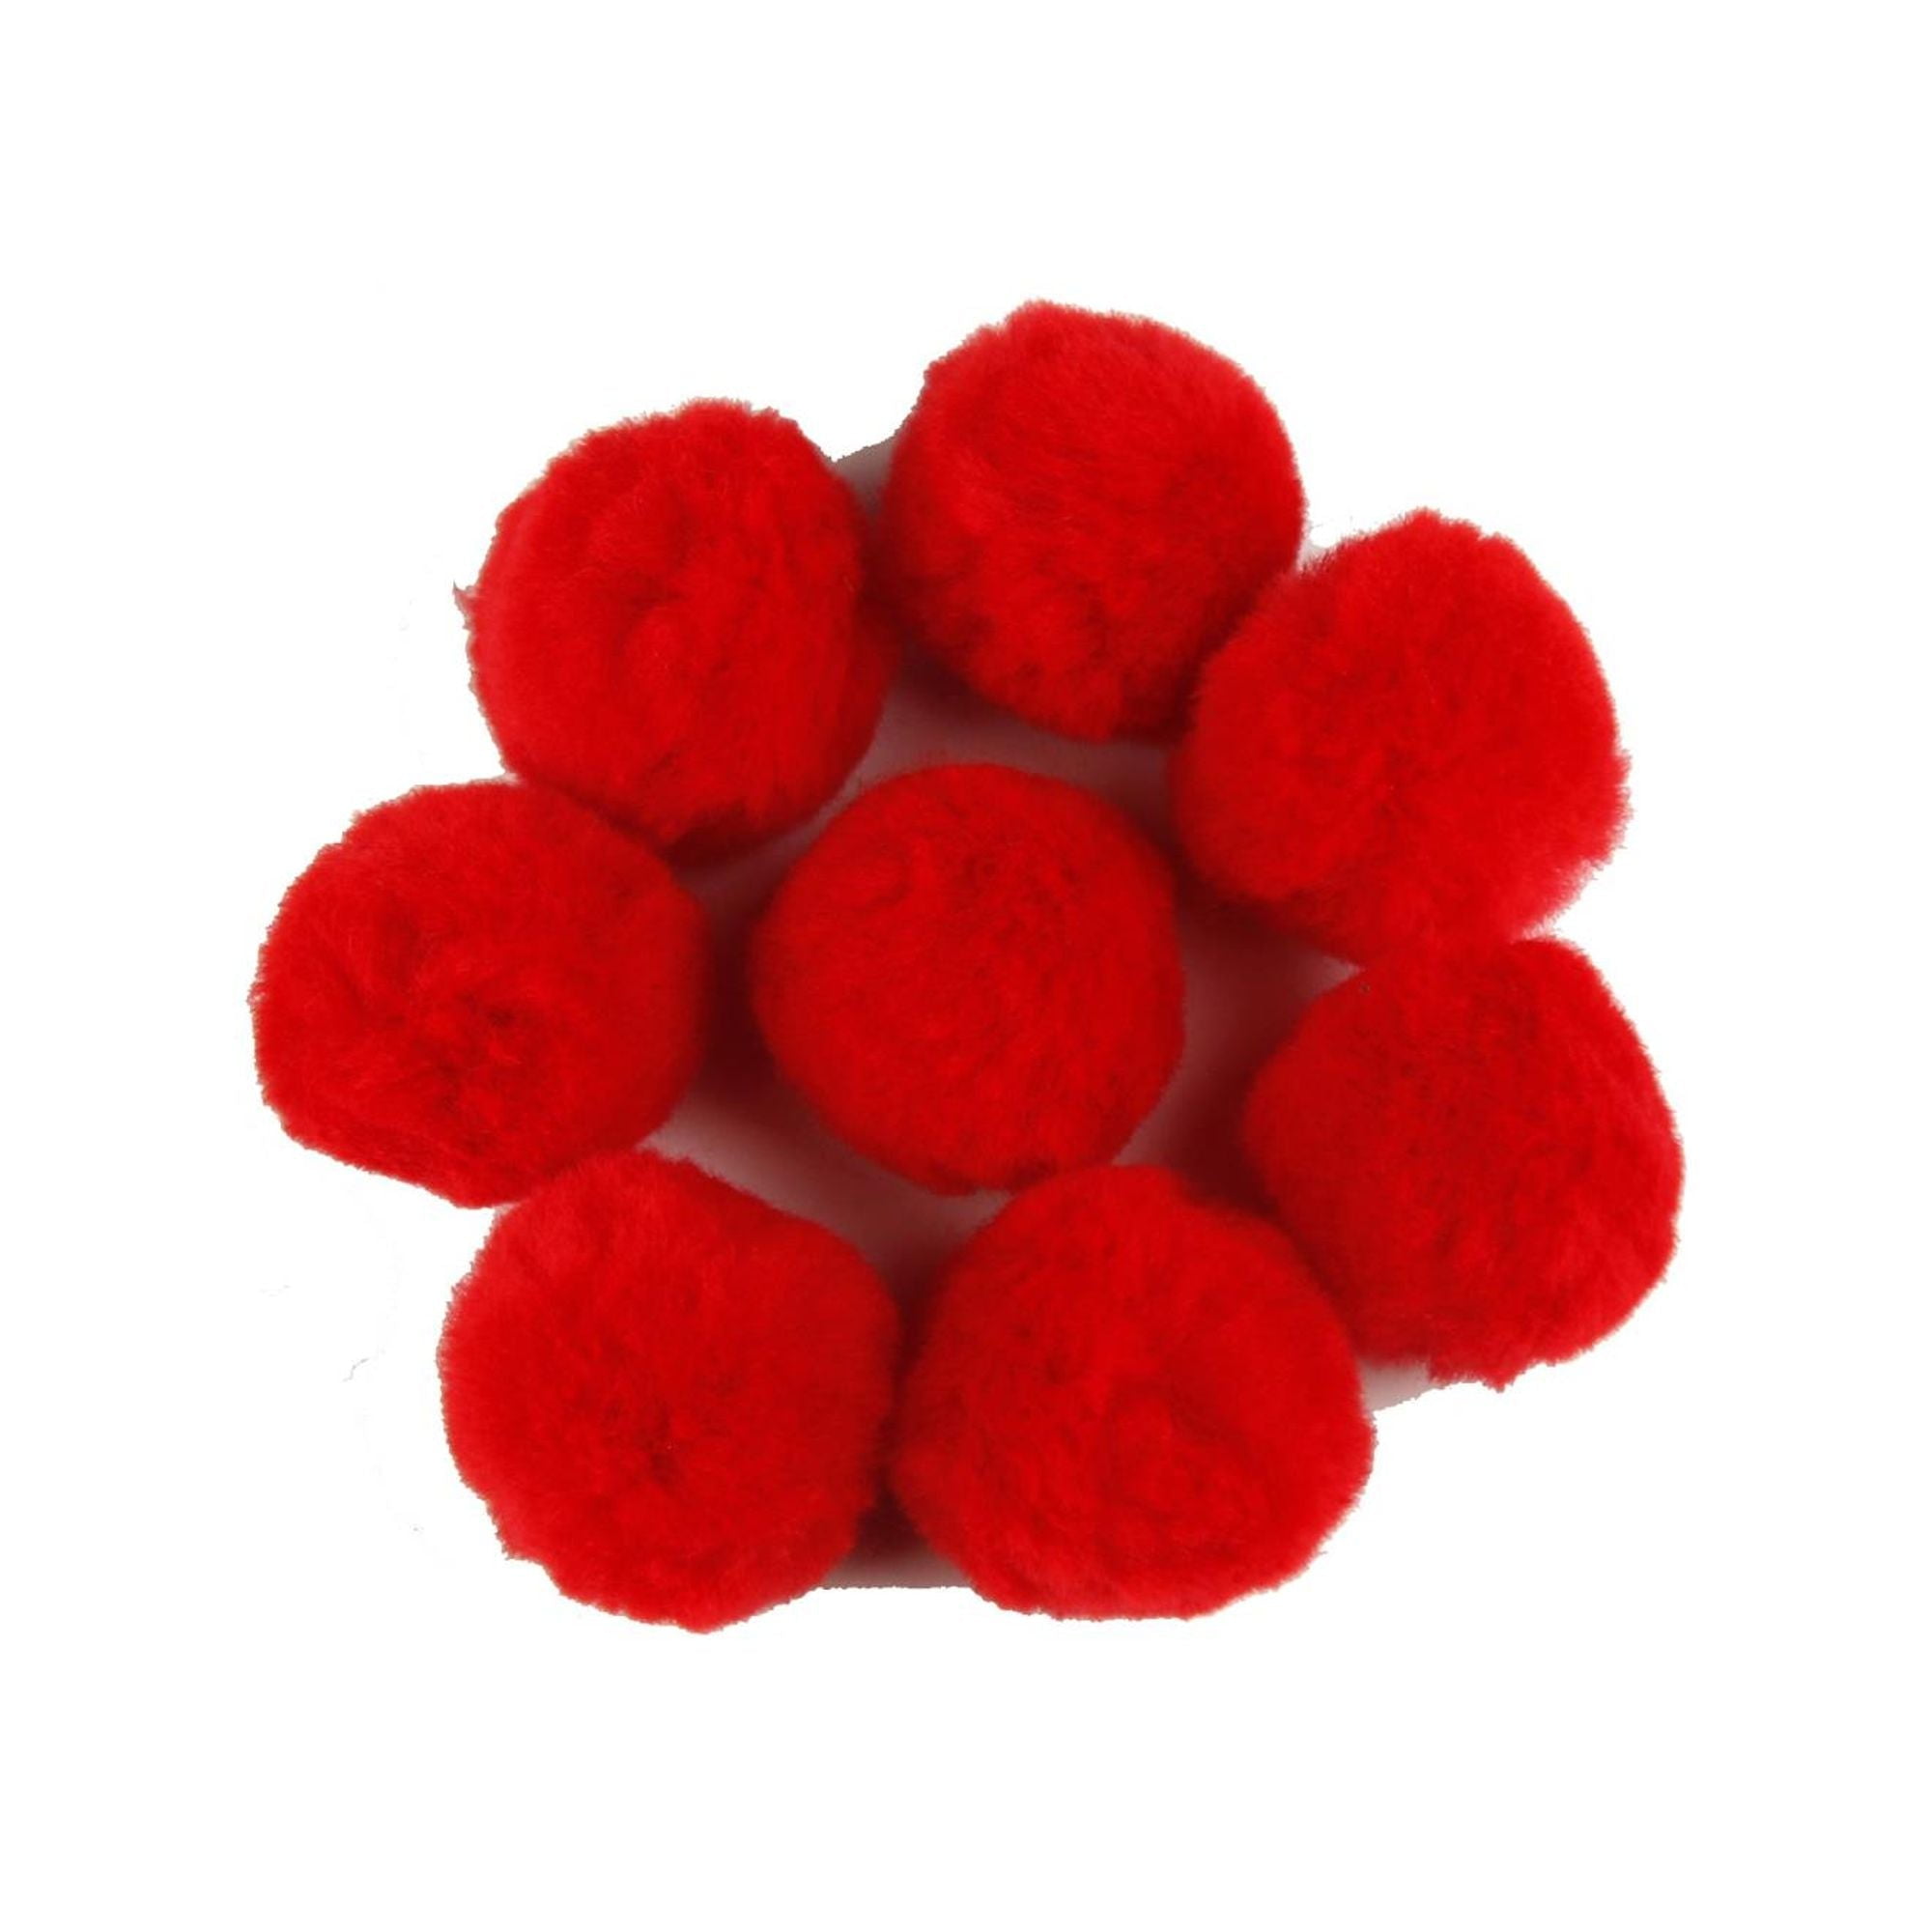 2 inch Red Craft Pom Poms 25 Pieces, Size: 0.5